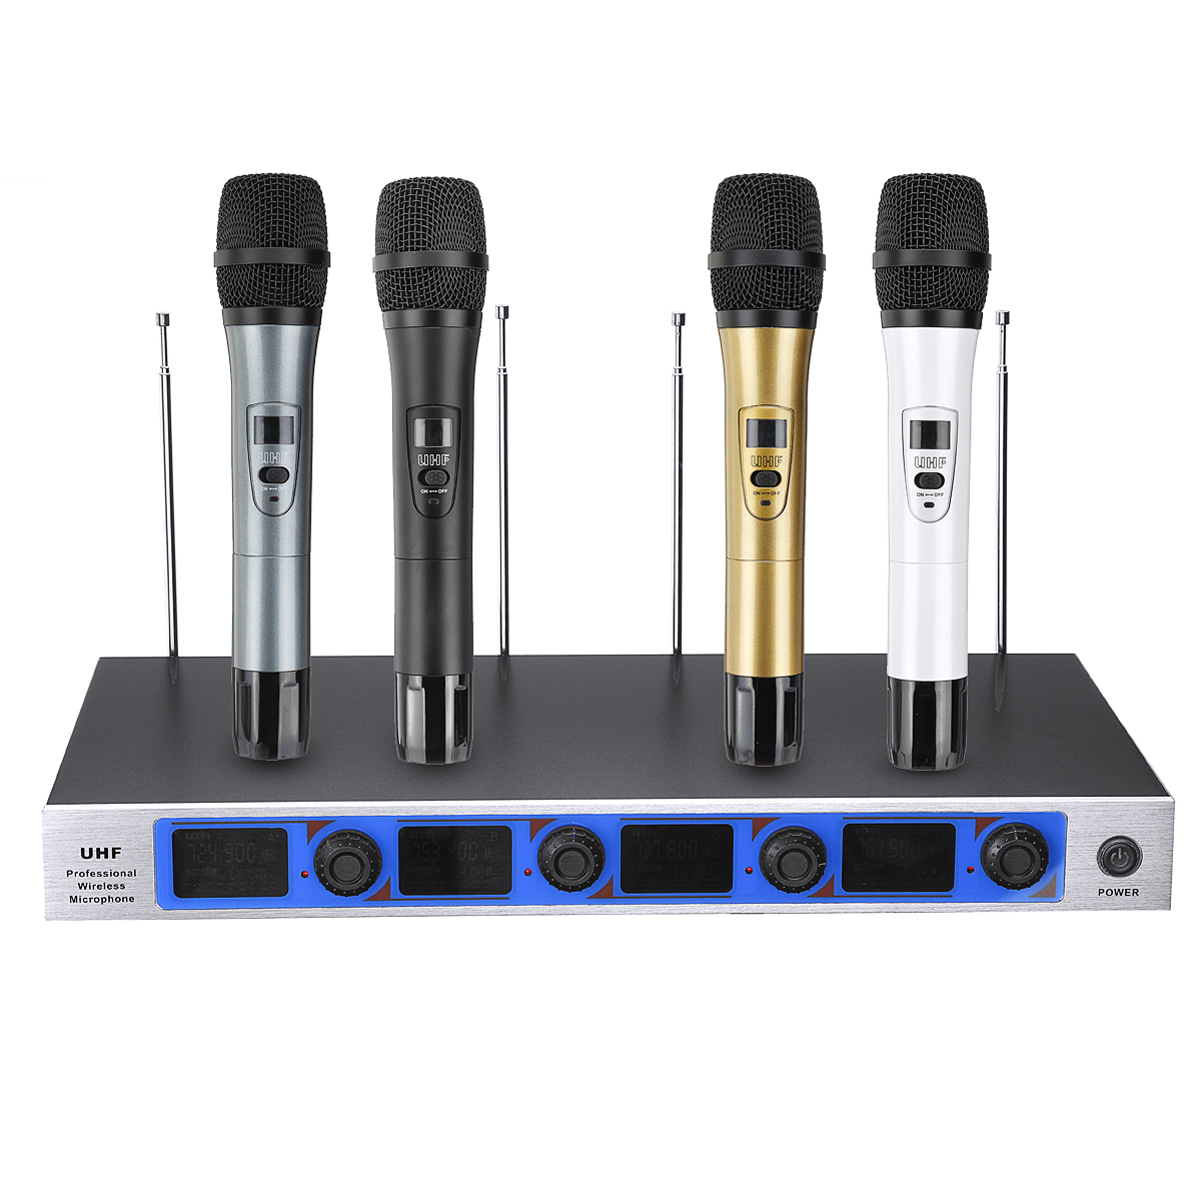 UHF professional Wireless Microphone. Professional Universal Wireless Microphone. KX-d3934/микшер для микрофонов + 4 беспроводных микрофонов. K9 Wireless Microphone.